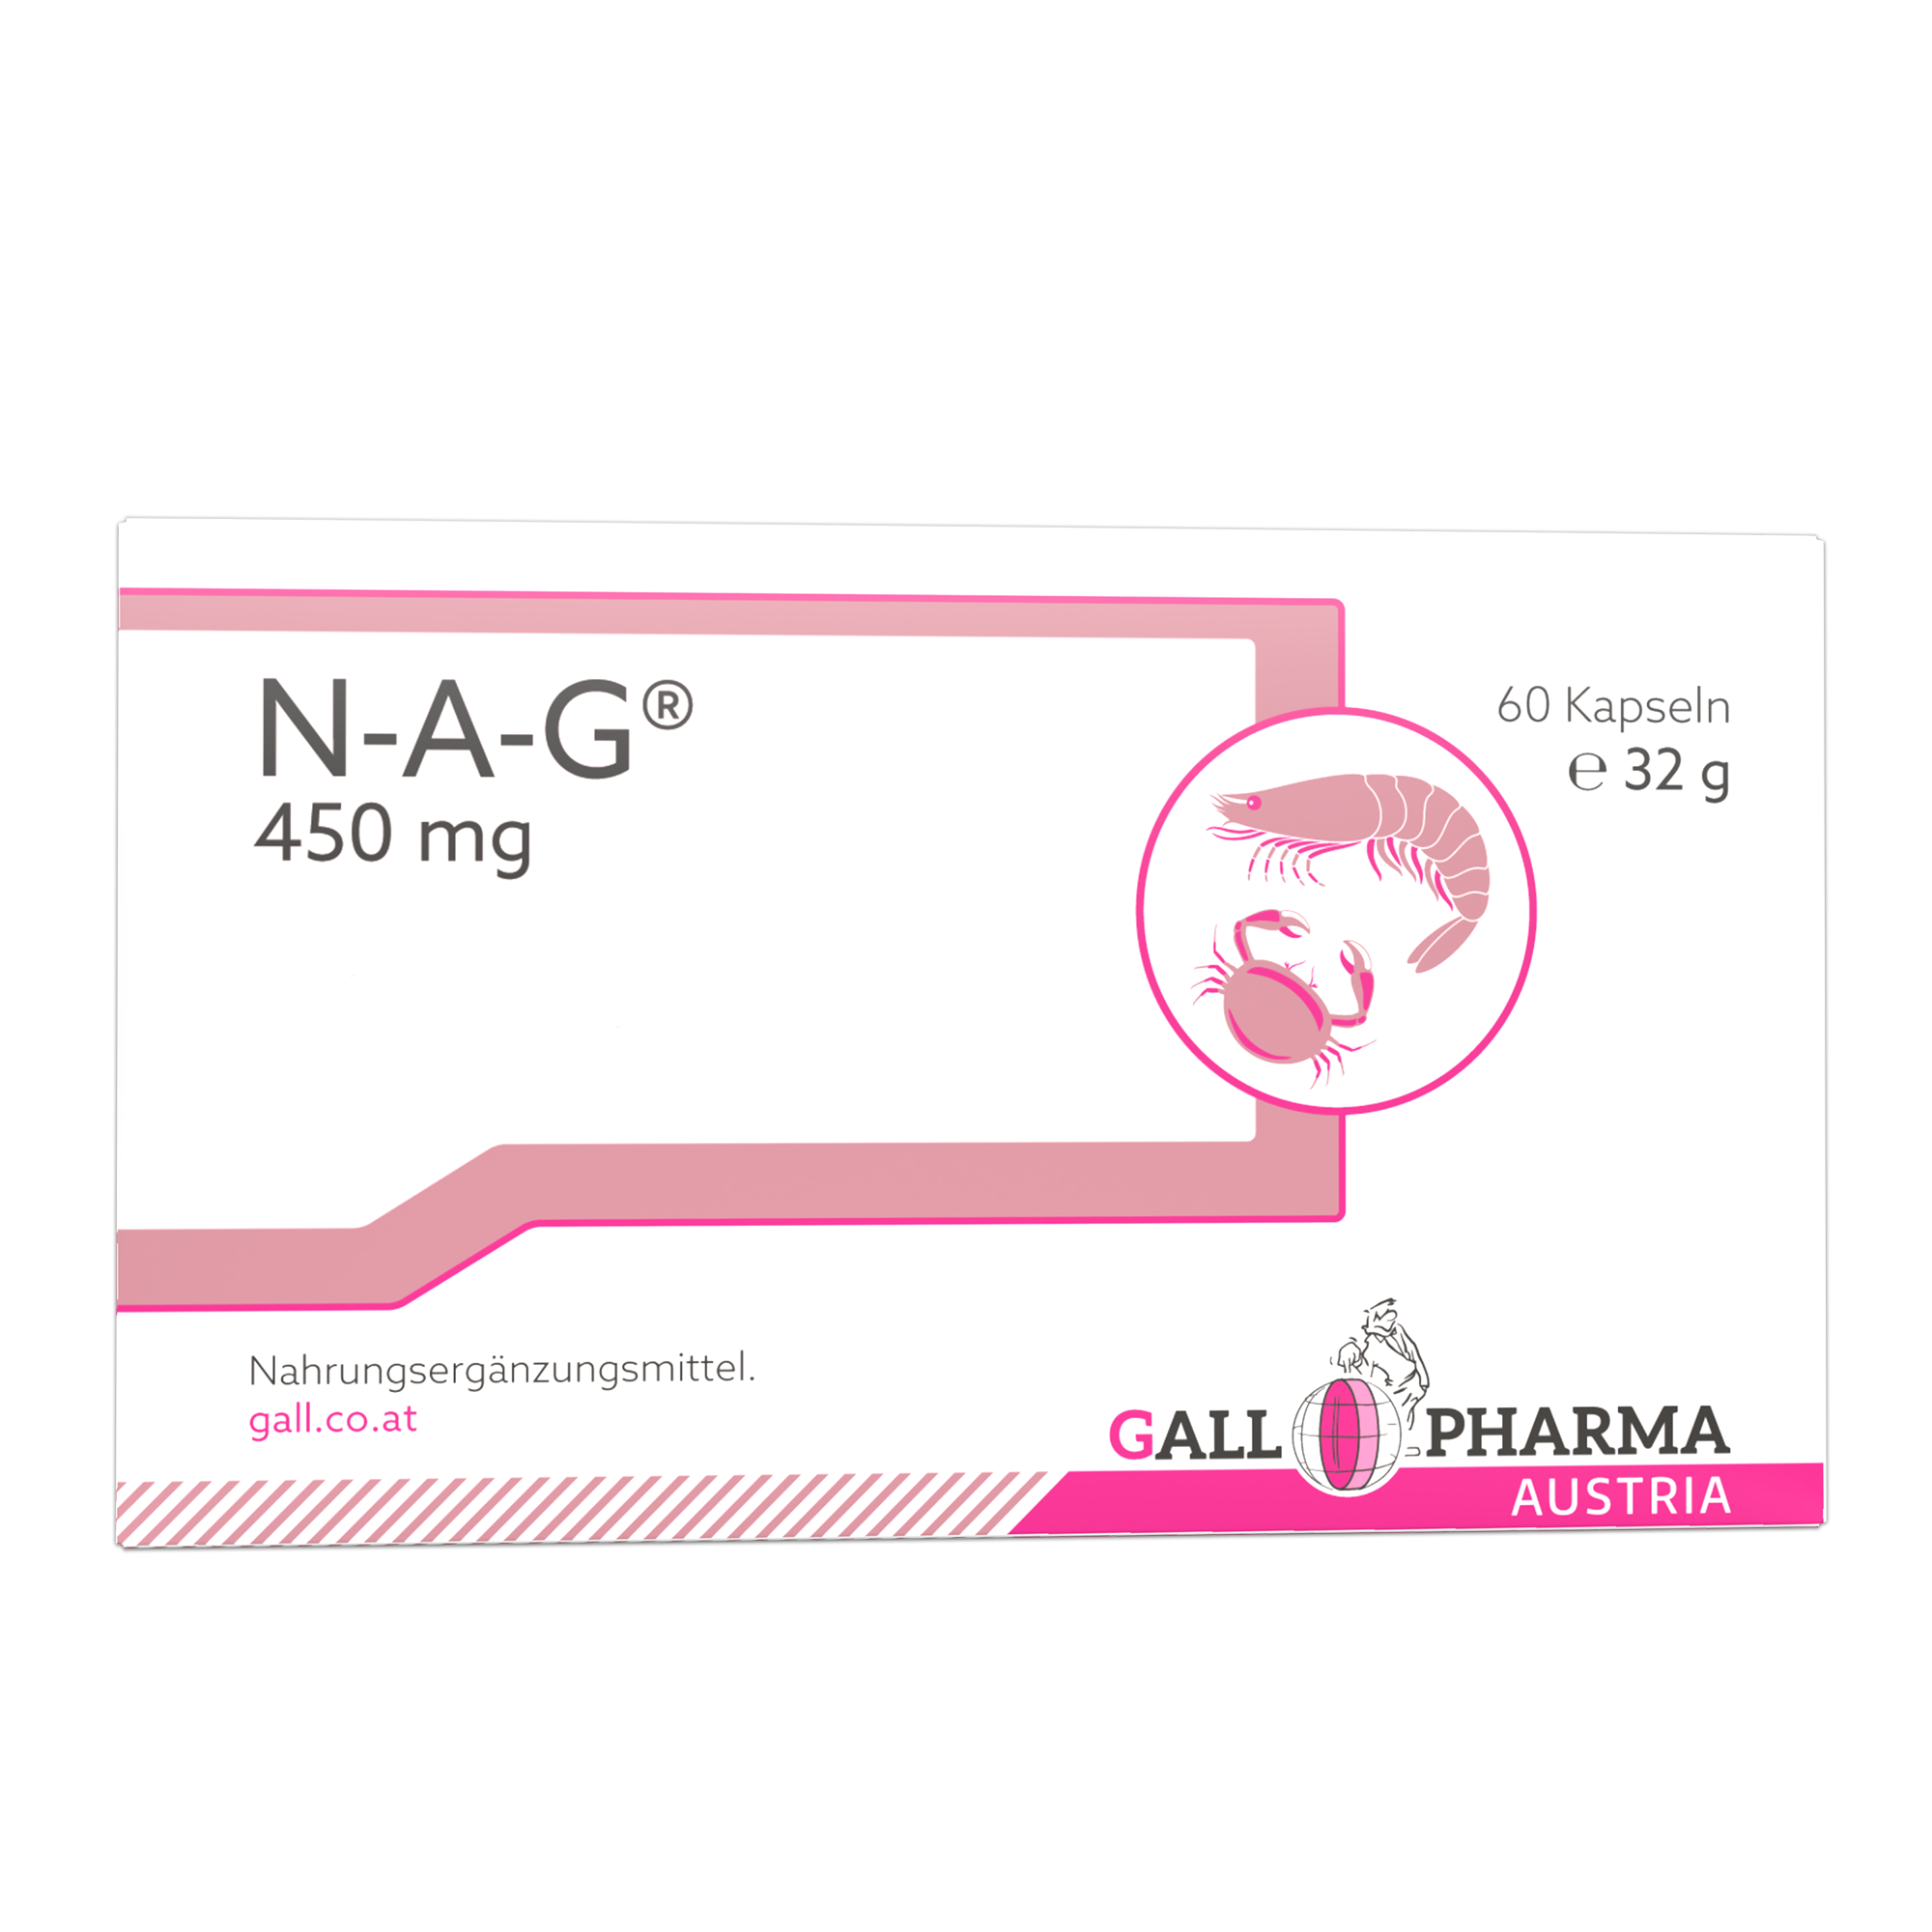 N-A-G® 450 mg Kapseln